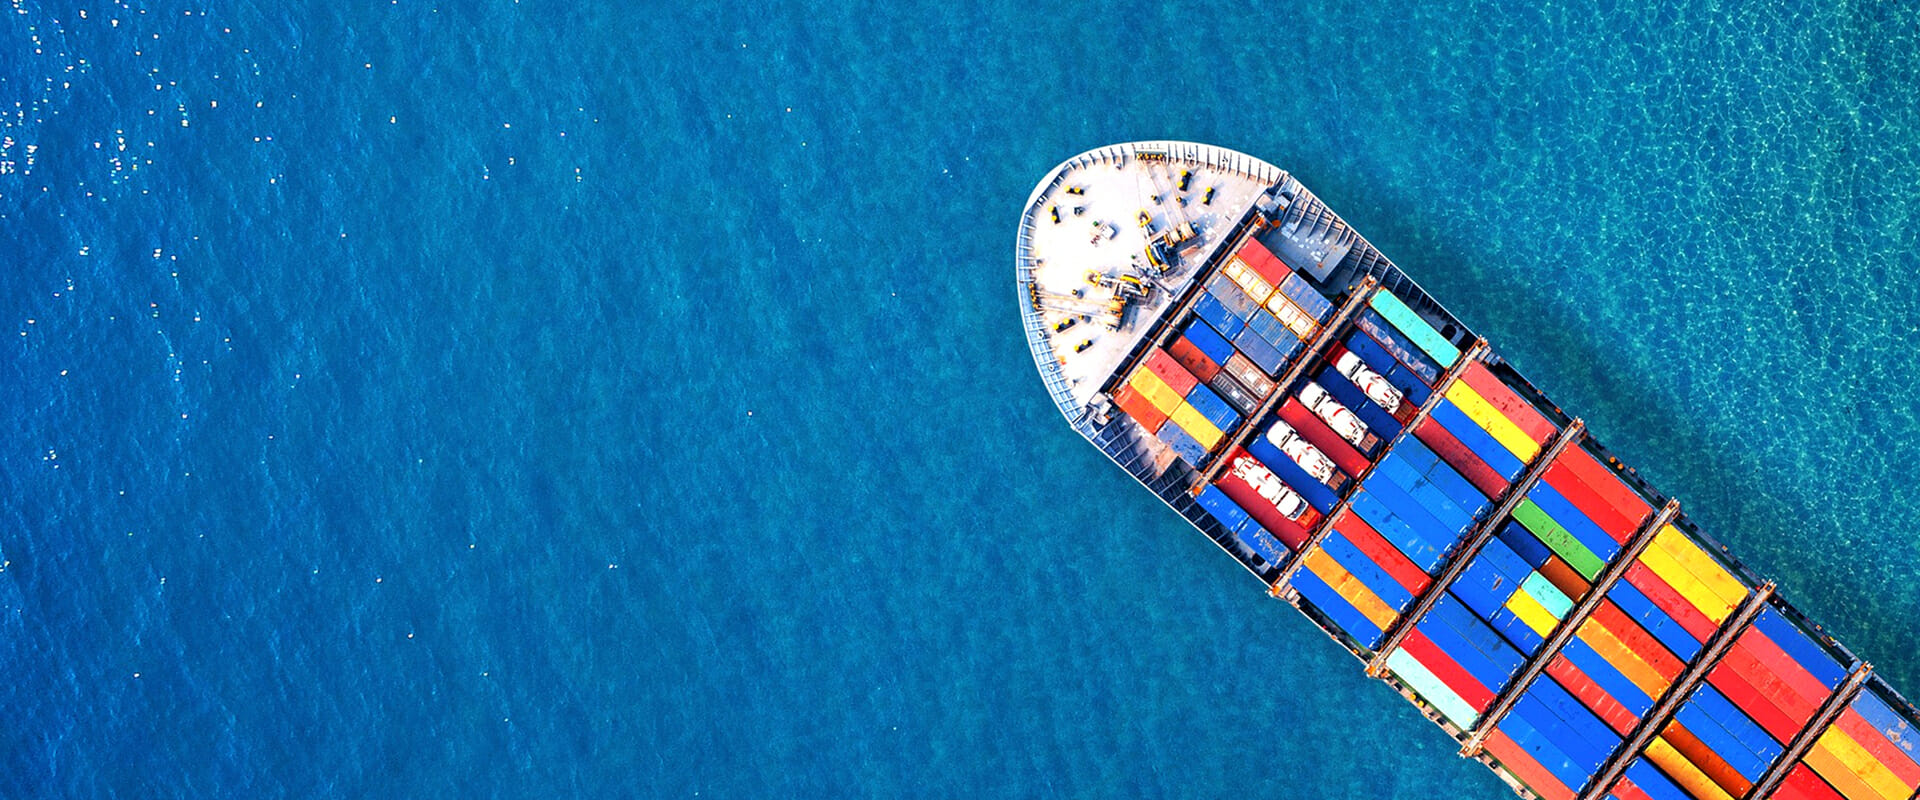 aerial-view-container-cargo-ship-sea-1-11.jpg